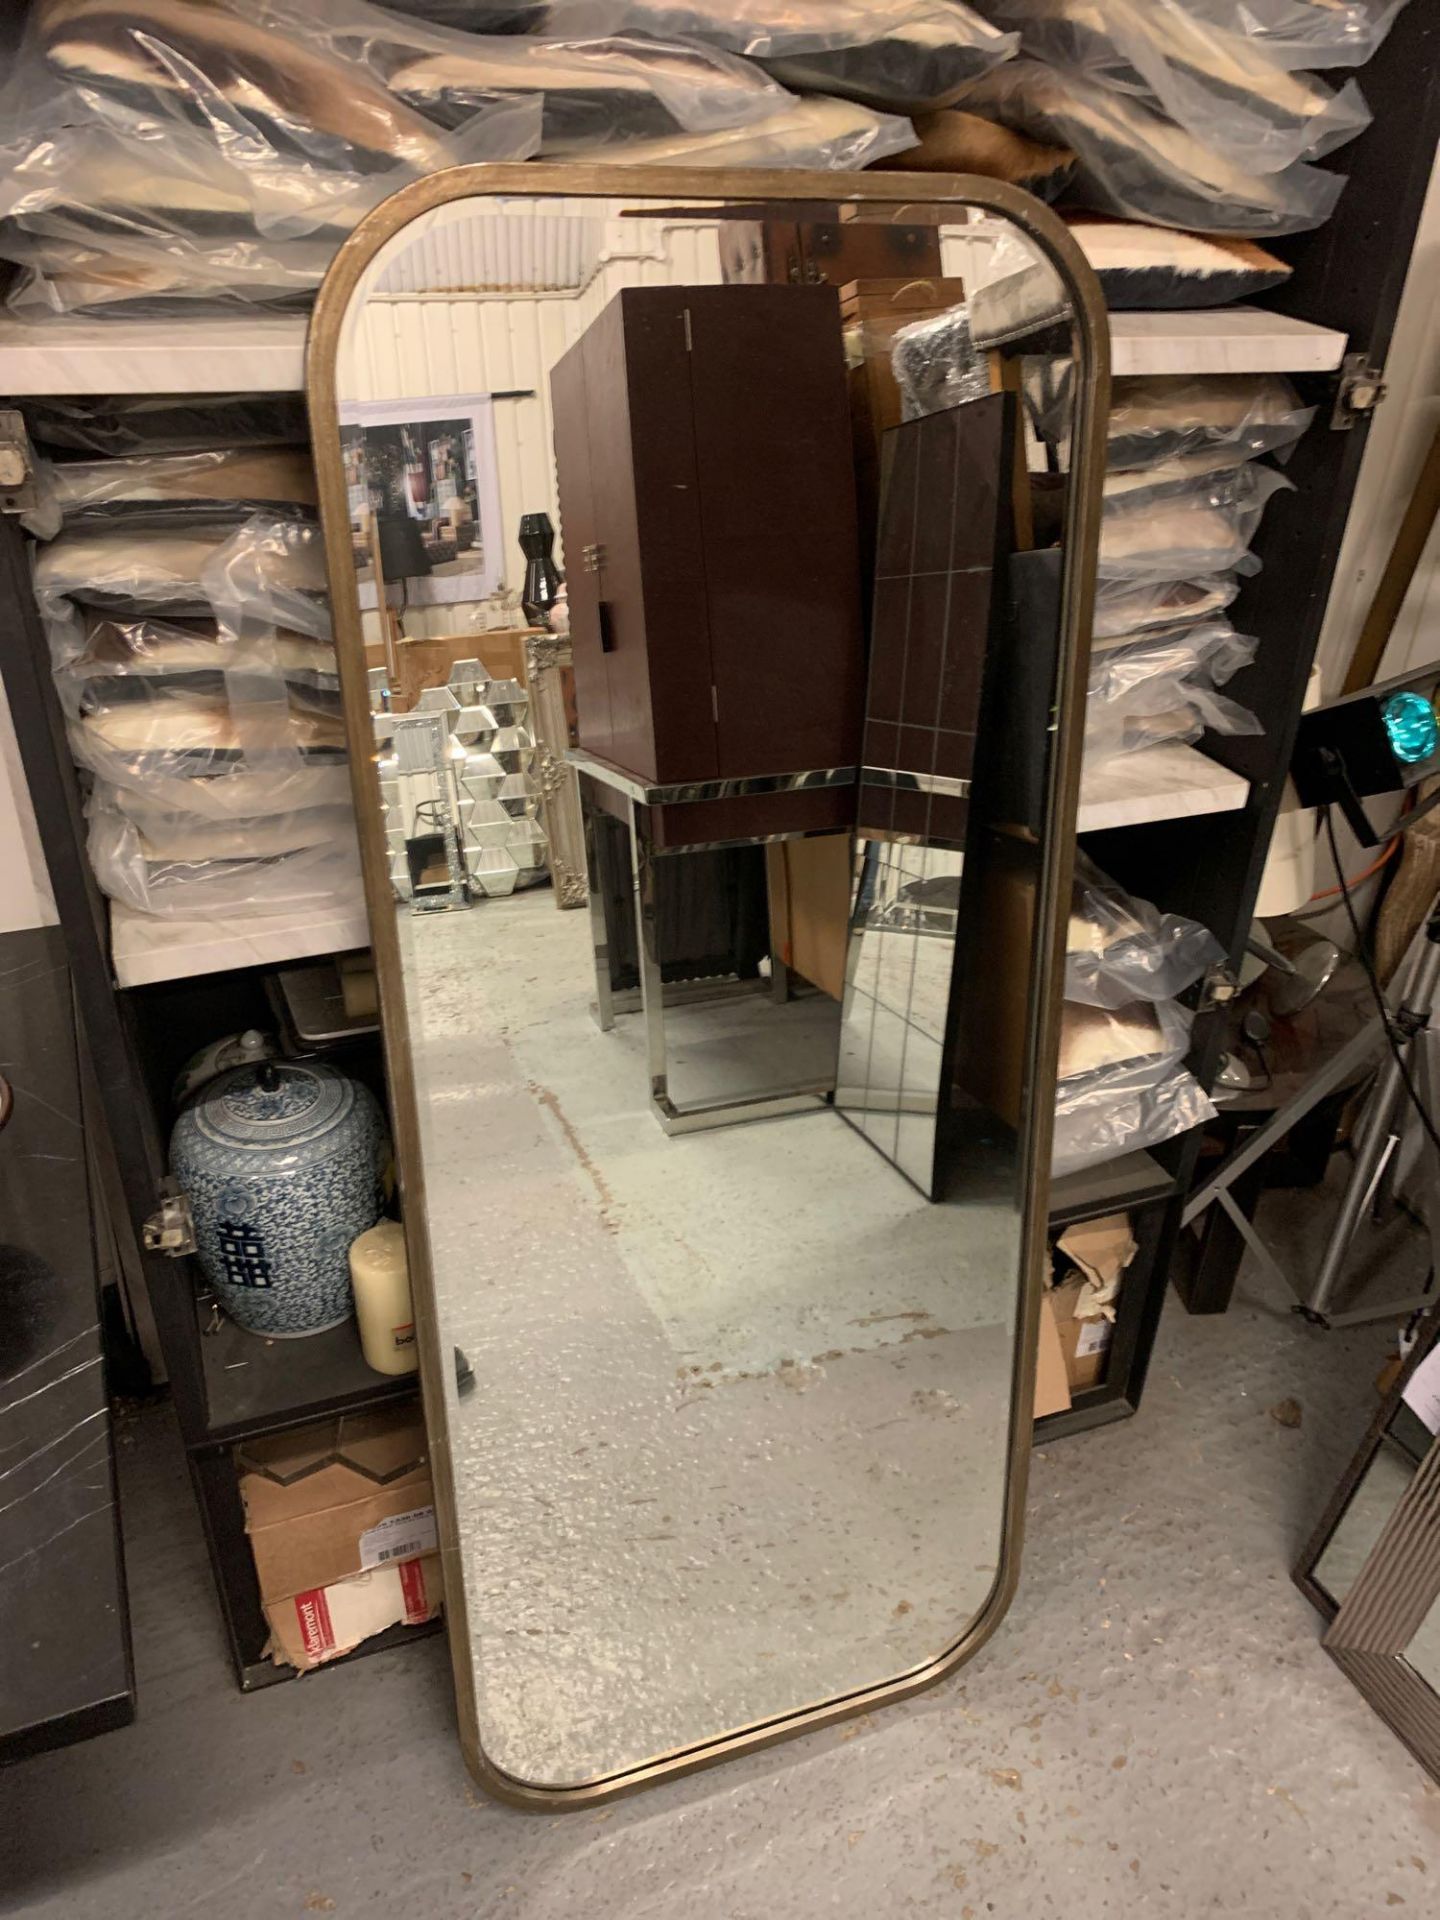 Logan leaner mirror - Image 2 of 4